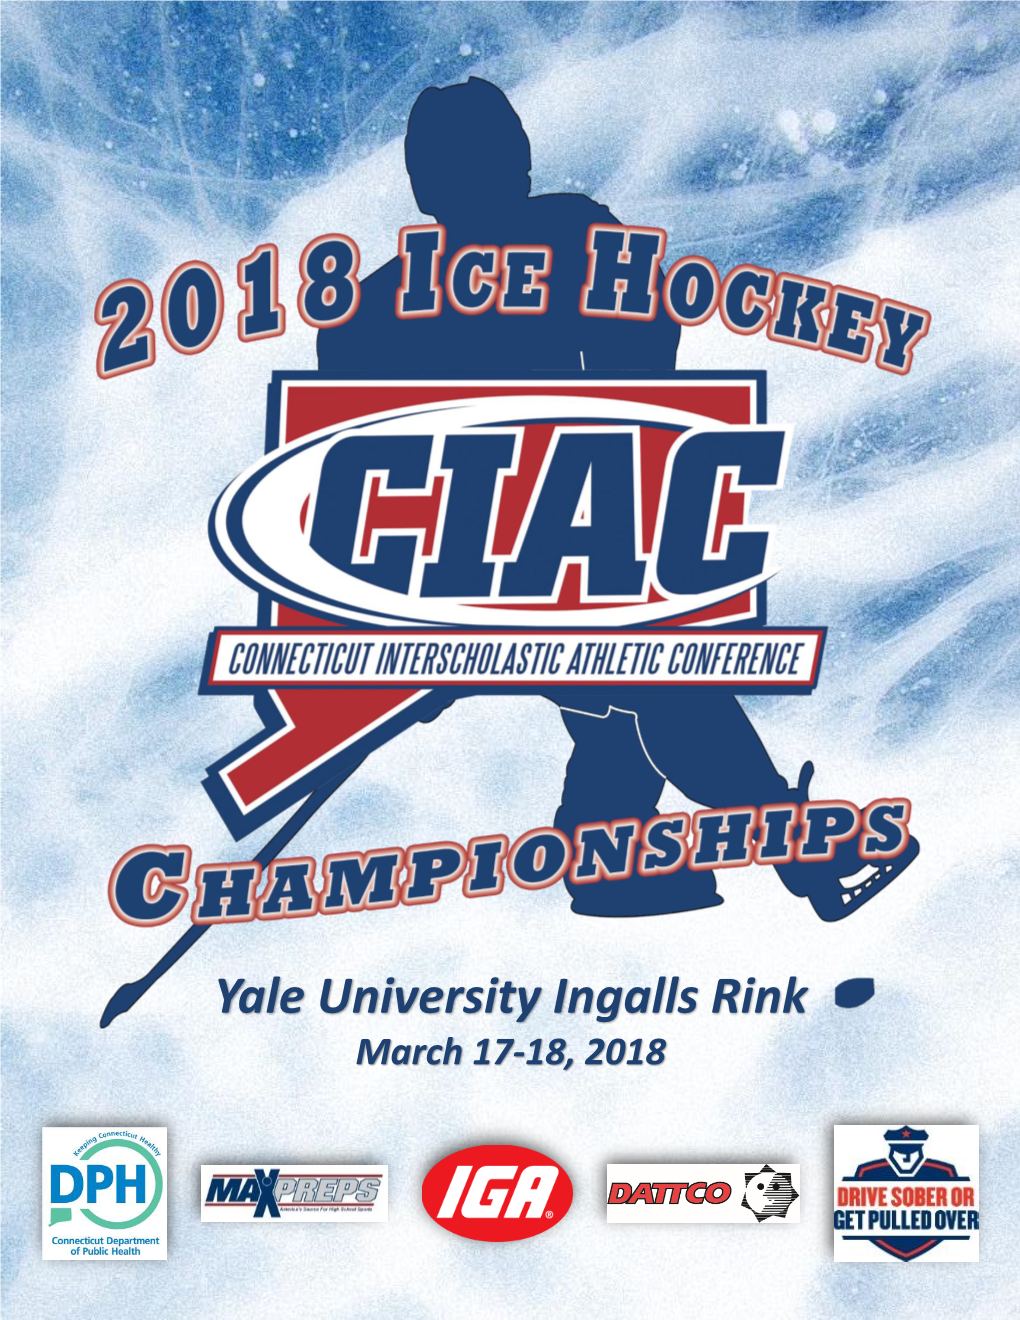 Yale University Ingalls Rink March 17-18, 2018